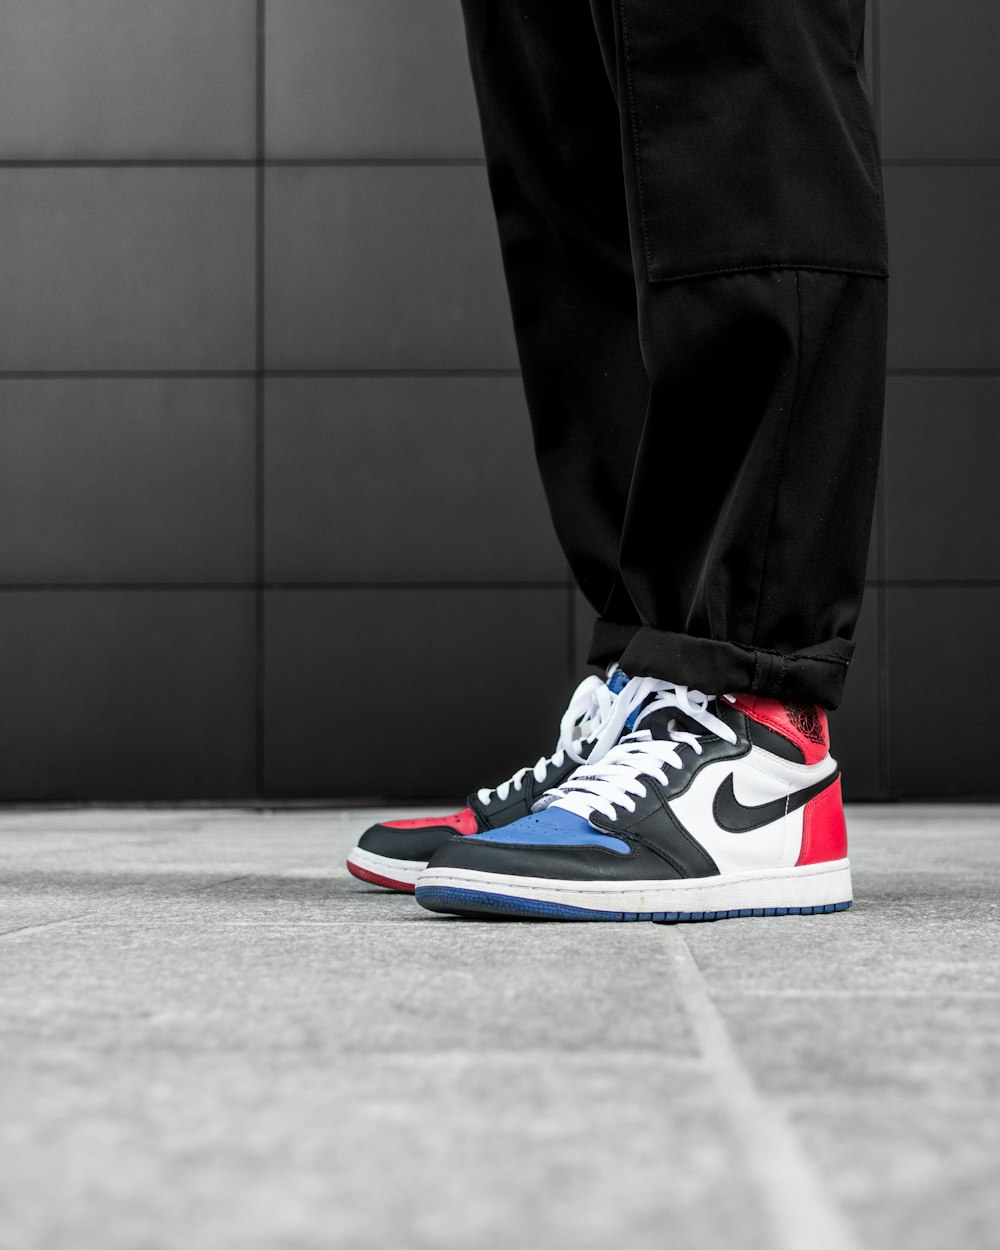 man blue-red-and-black Nike Air Jordan shoes photo Free Apparel Image on Unsplash